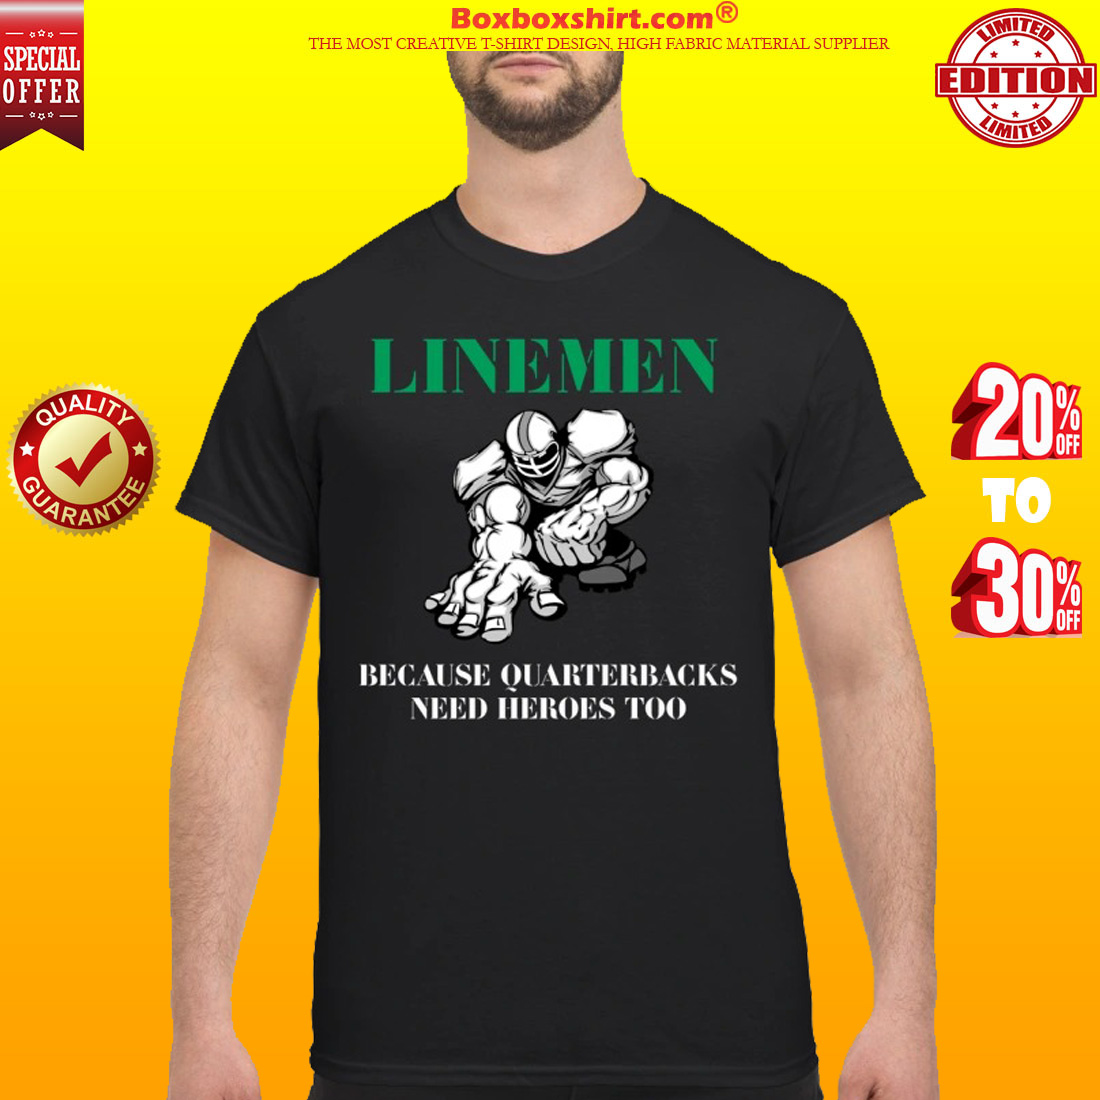 Lineman because quaterbacks need heroes too classic shirt